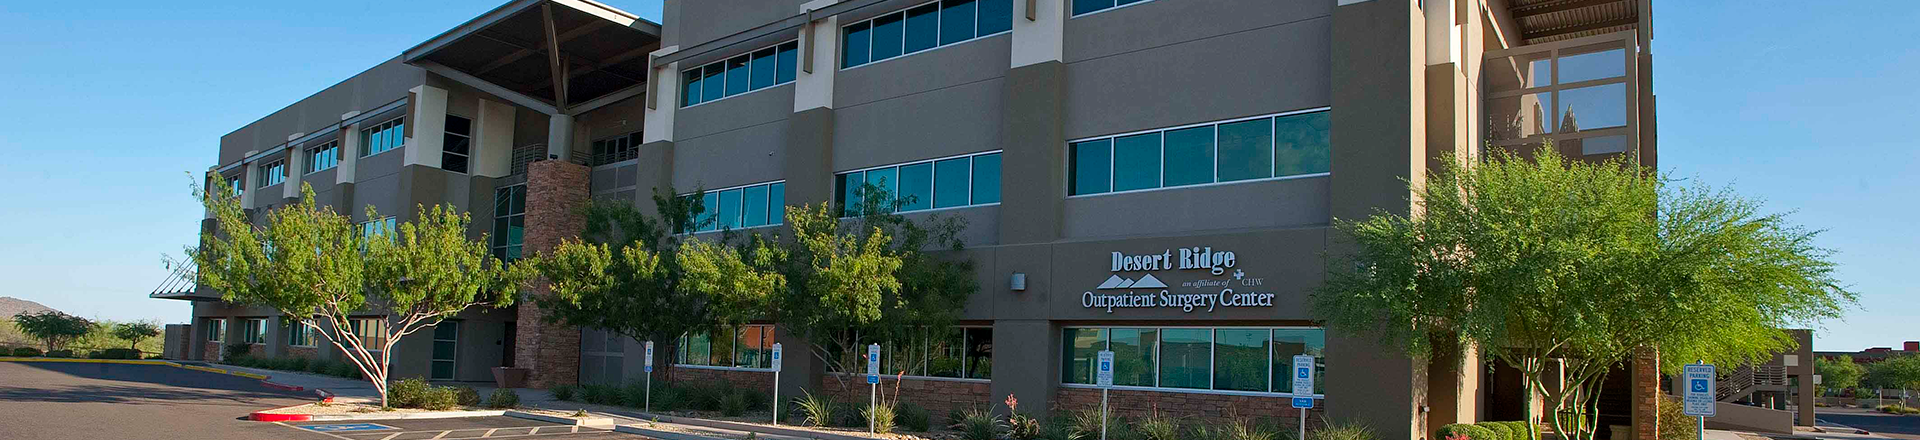 Desert Ridge Outpatient Surgery Center